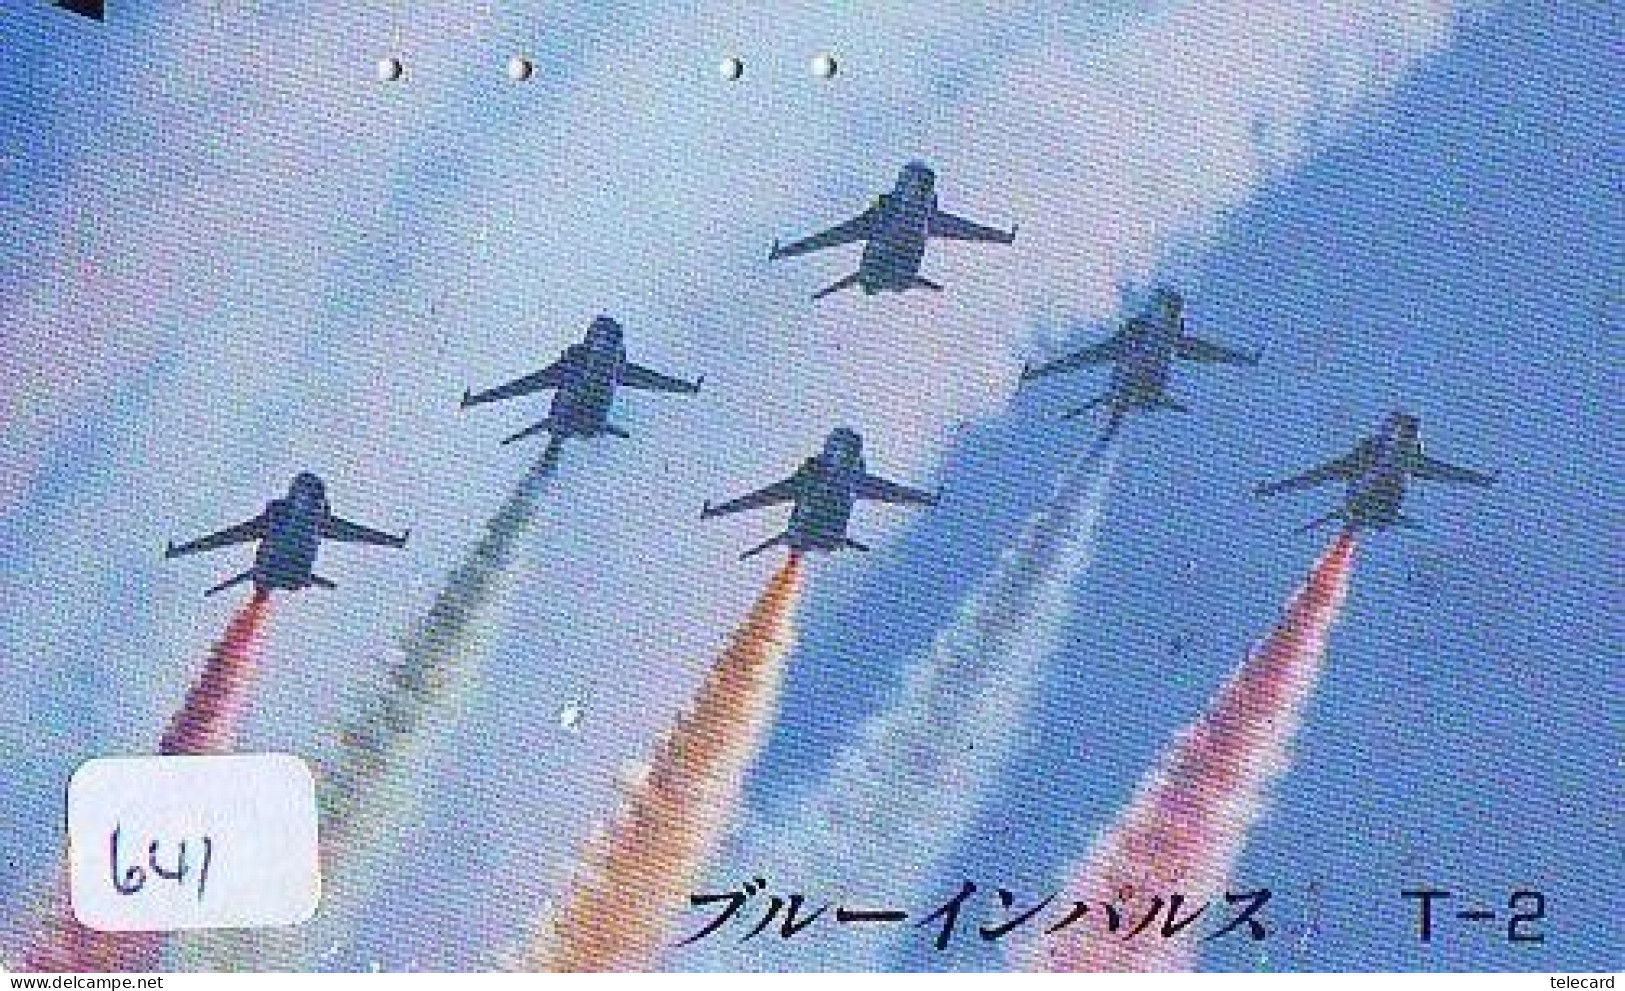 TELECARTE JAPON * MILITAIRY AVION  (641)  Flugzeuge * Airplane * Aeroplano * PHONECARD JAPAN * ARMEE * LEGER VLIEGTUIG - Armada